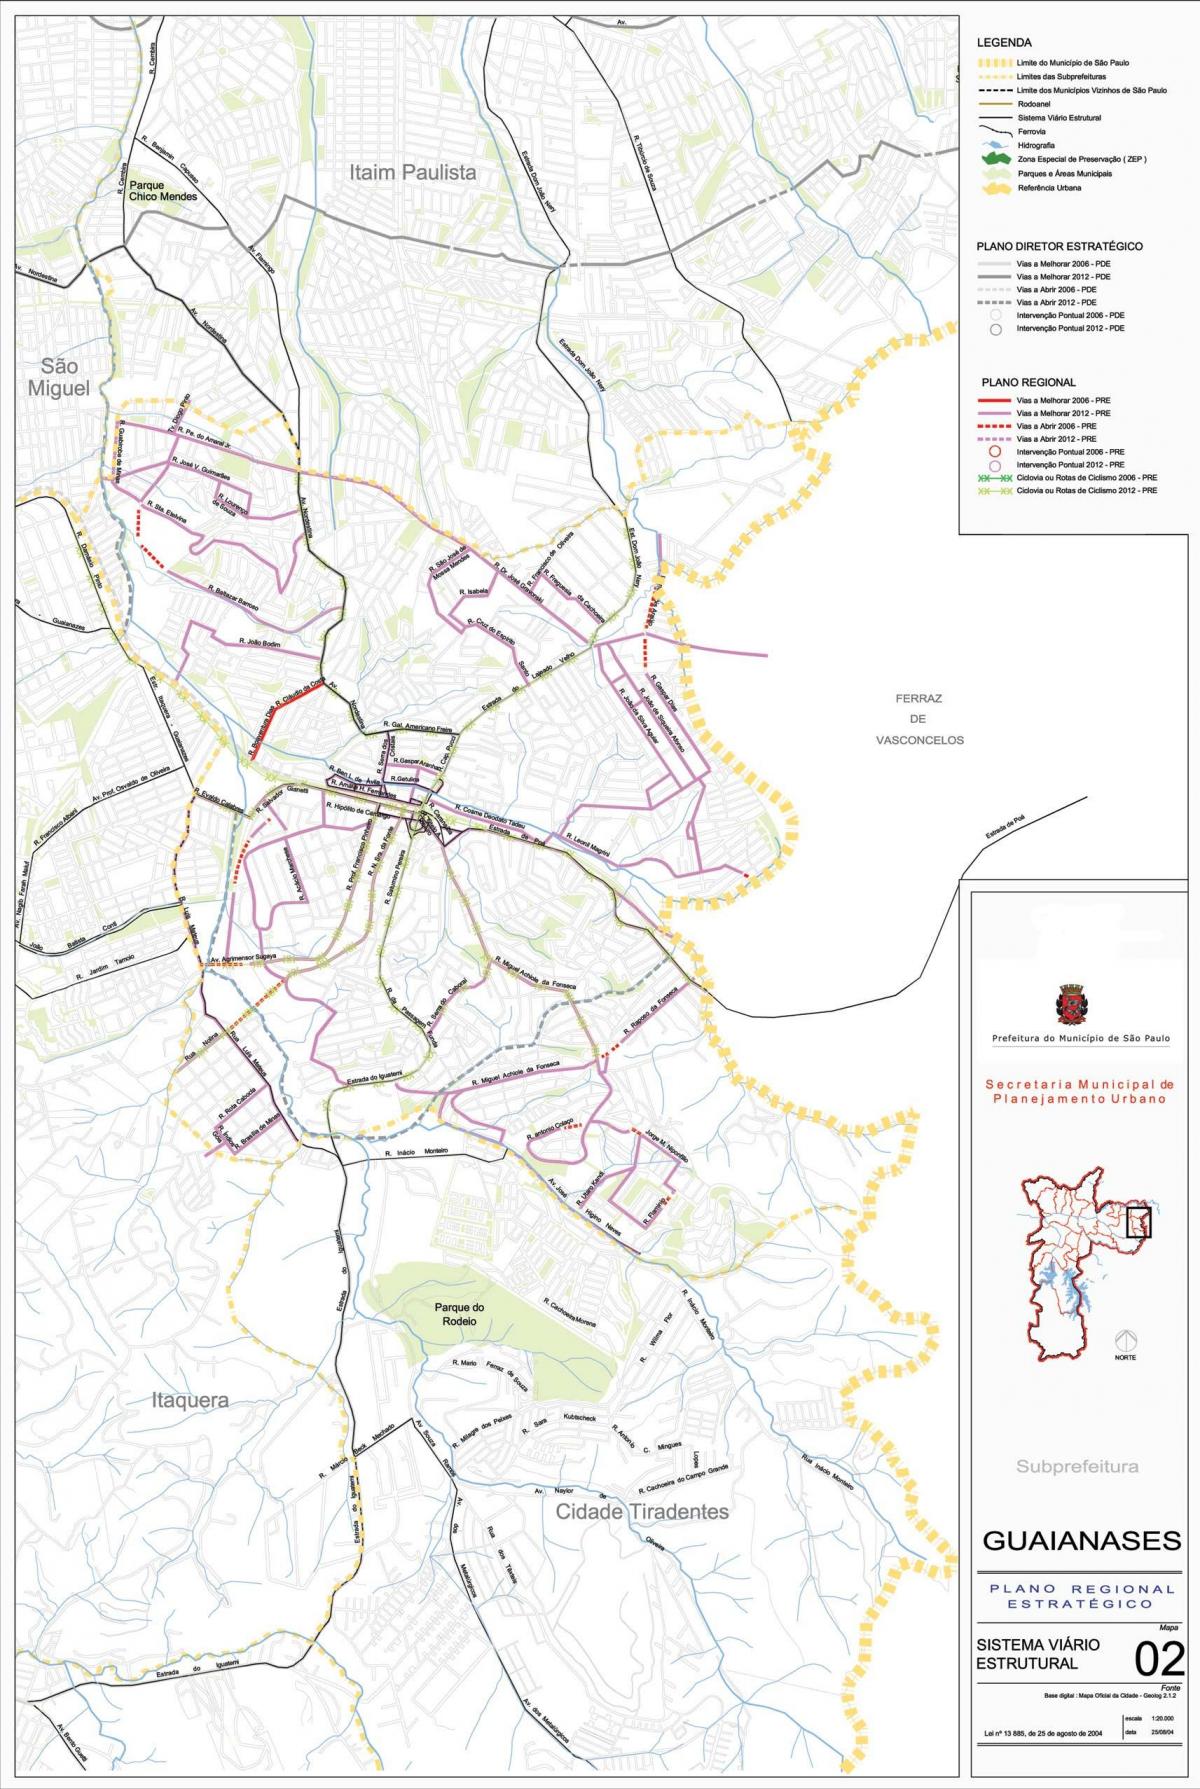 Kartta Guaianases São Paulo - Tiet